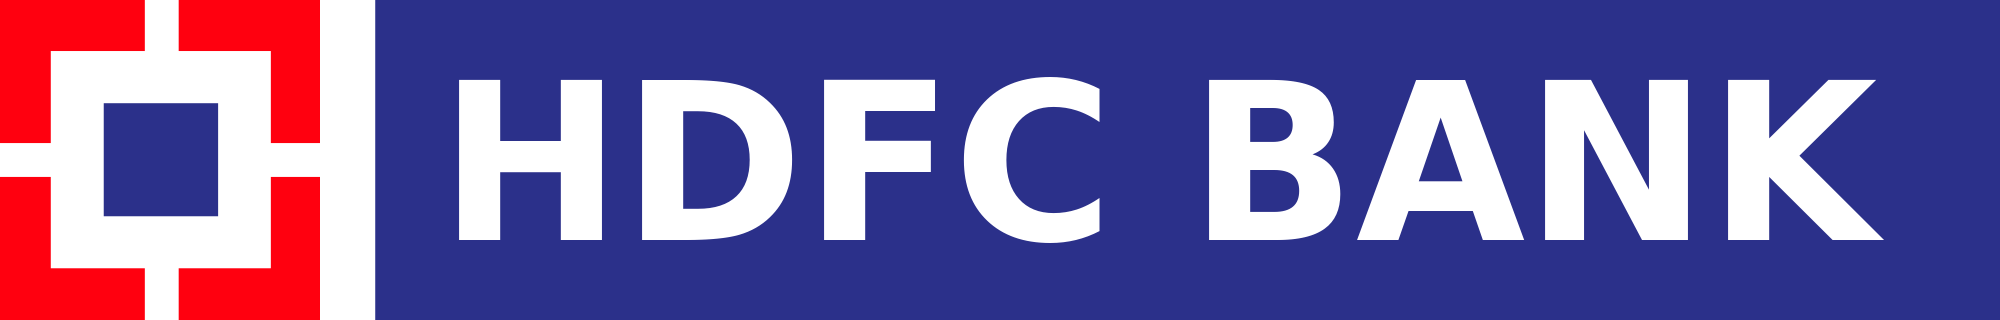 HDFC Logo - File:HDFC-Bank-Logo.svg - Wikimedia Commons